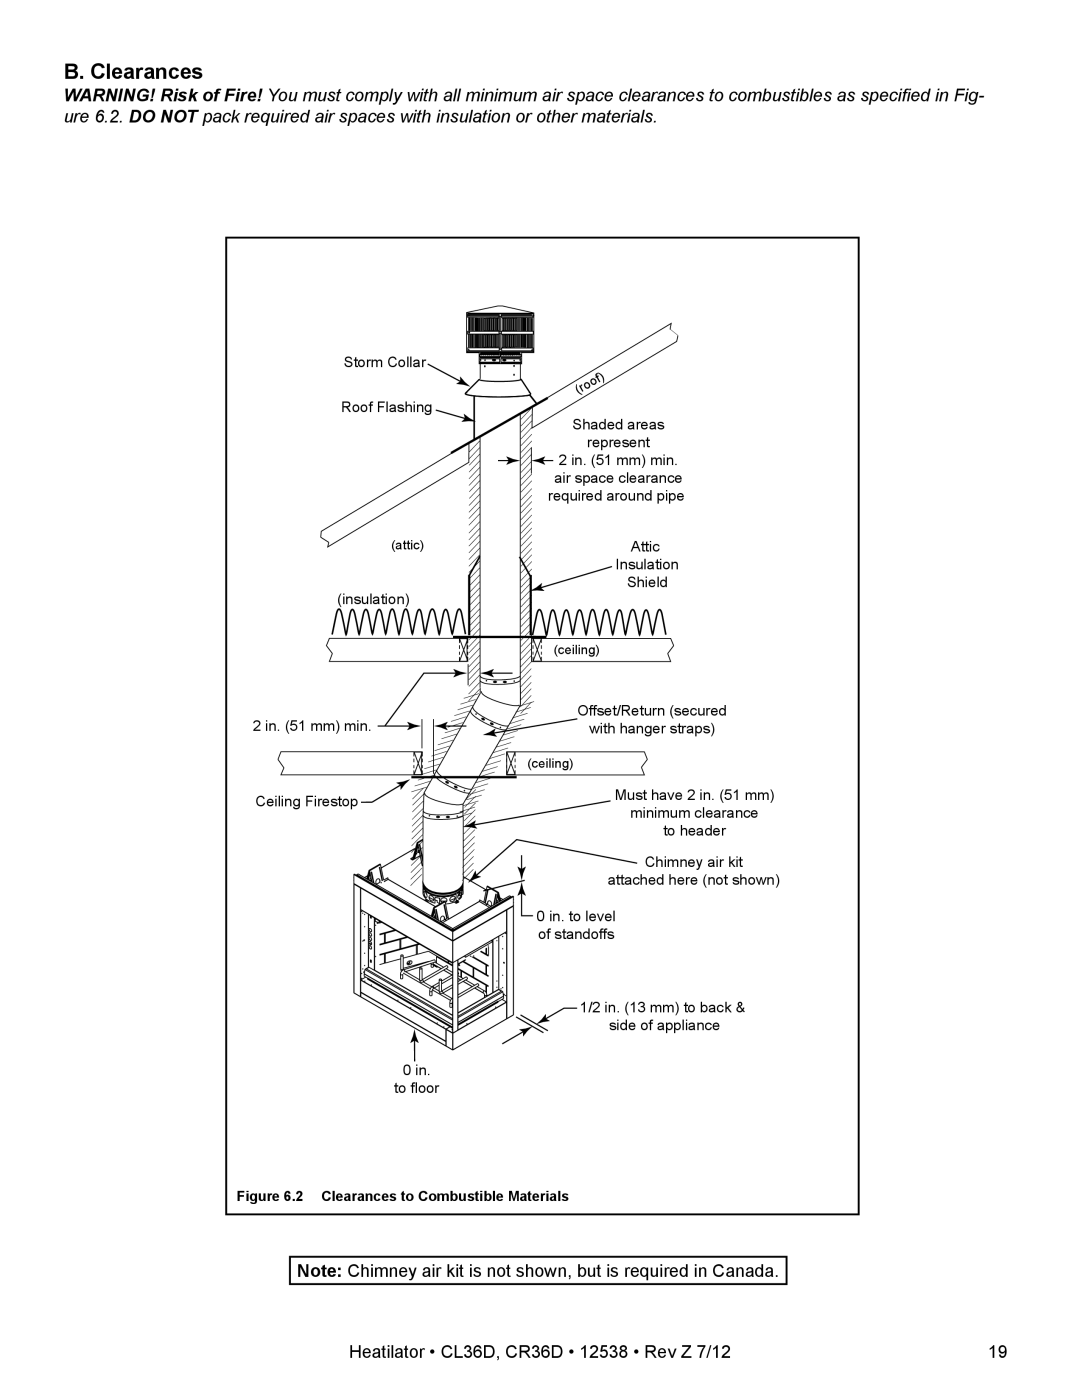 Heatiator owner manual B. Clearances, Heatilator • CL36D, CR36D • 12538 • Rev Z 7/12 